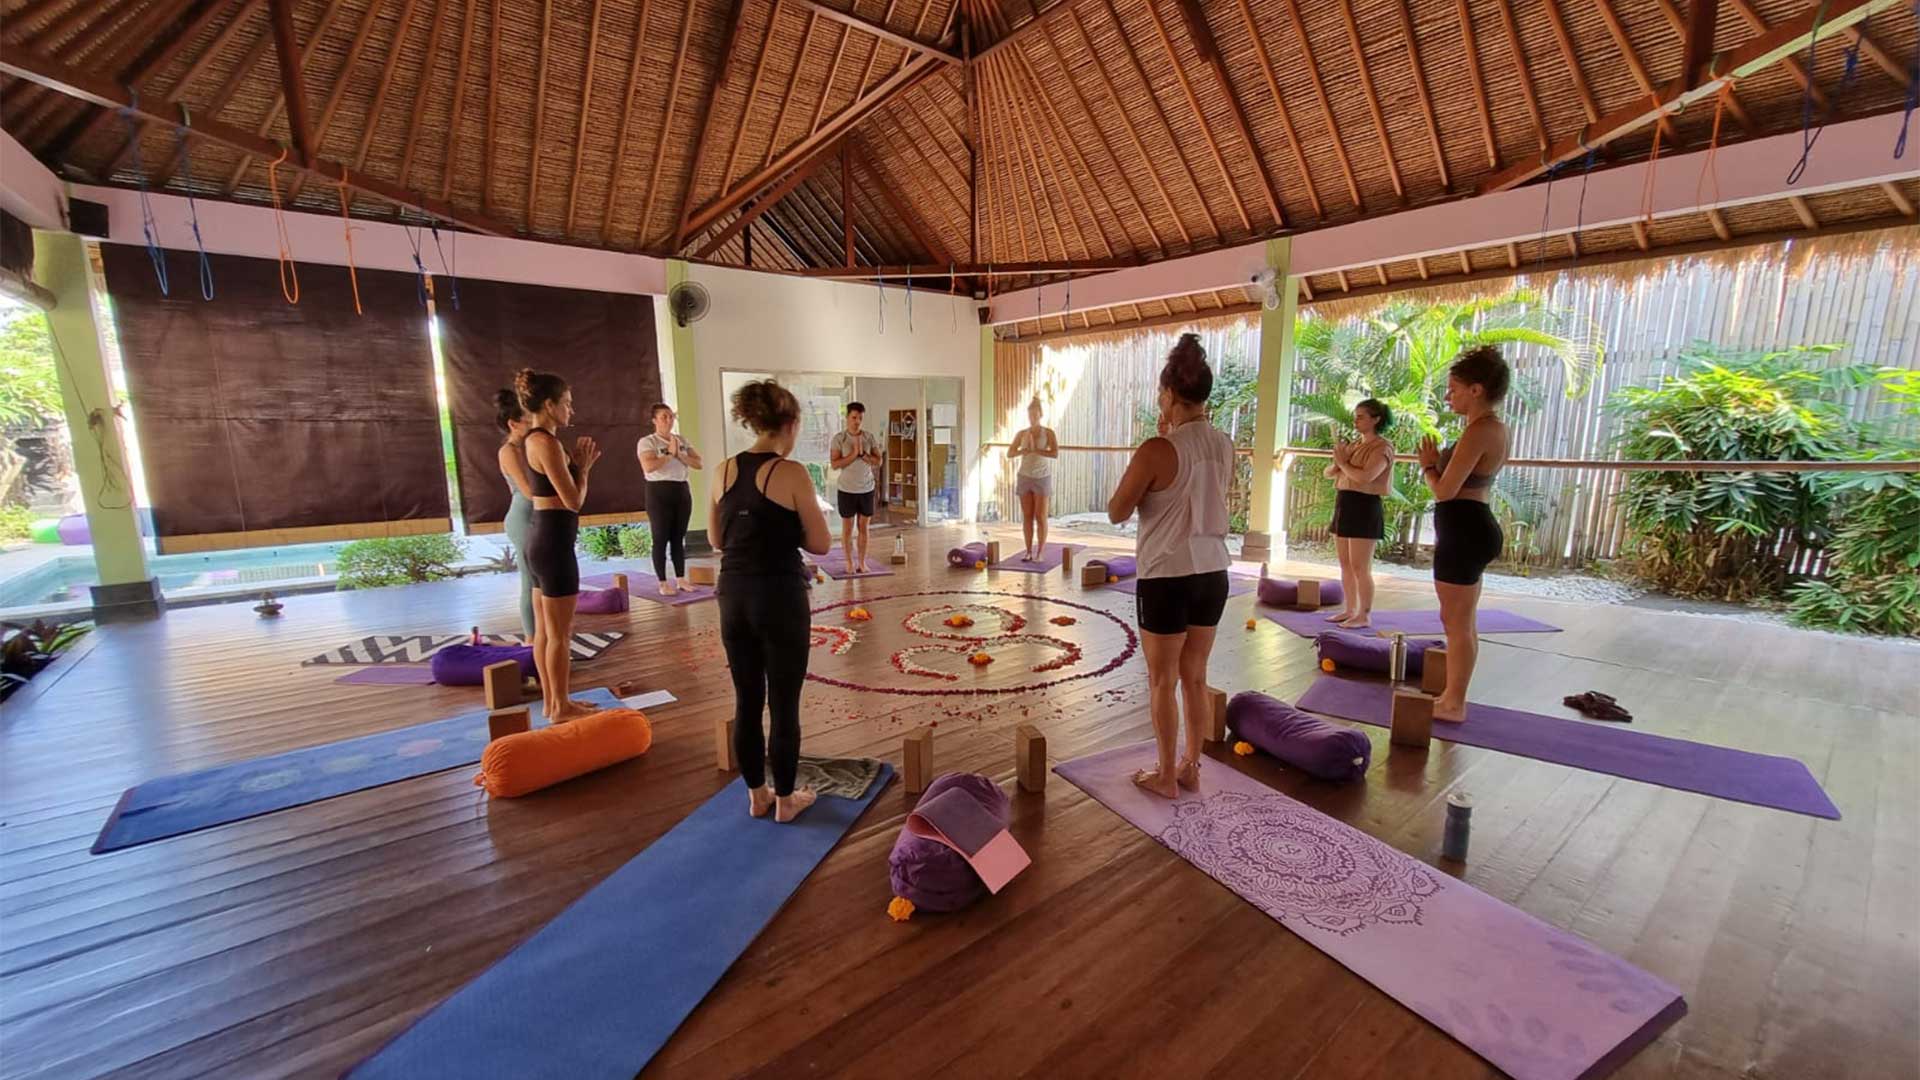 vinaysa yoga teacher training practice